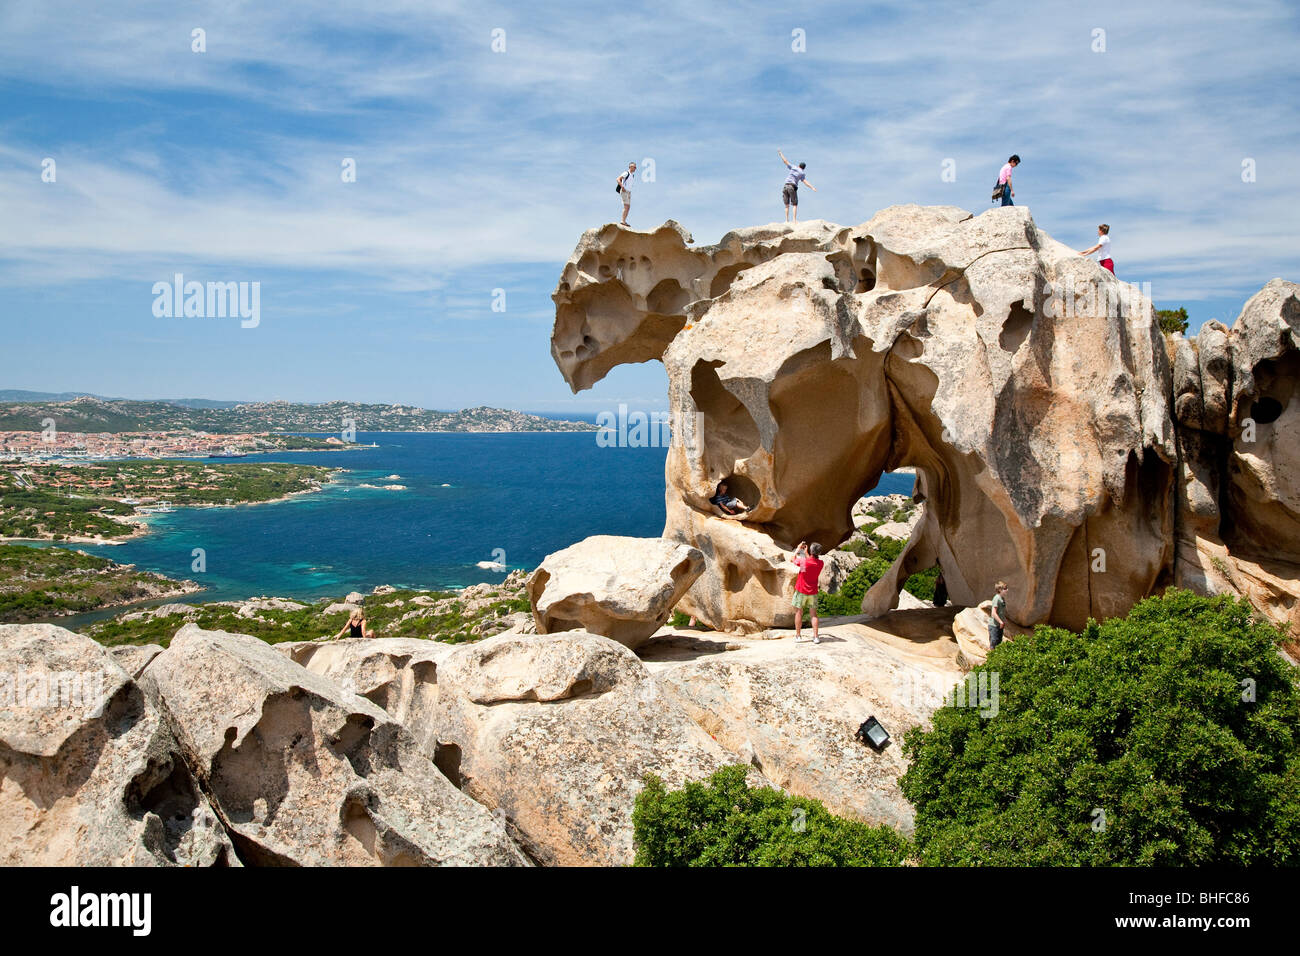 Tourists on a bear shaped rock formation, Capo d'Orso, Palau, Sardinia, Italy, Europe Stock Photo